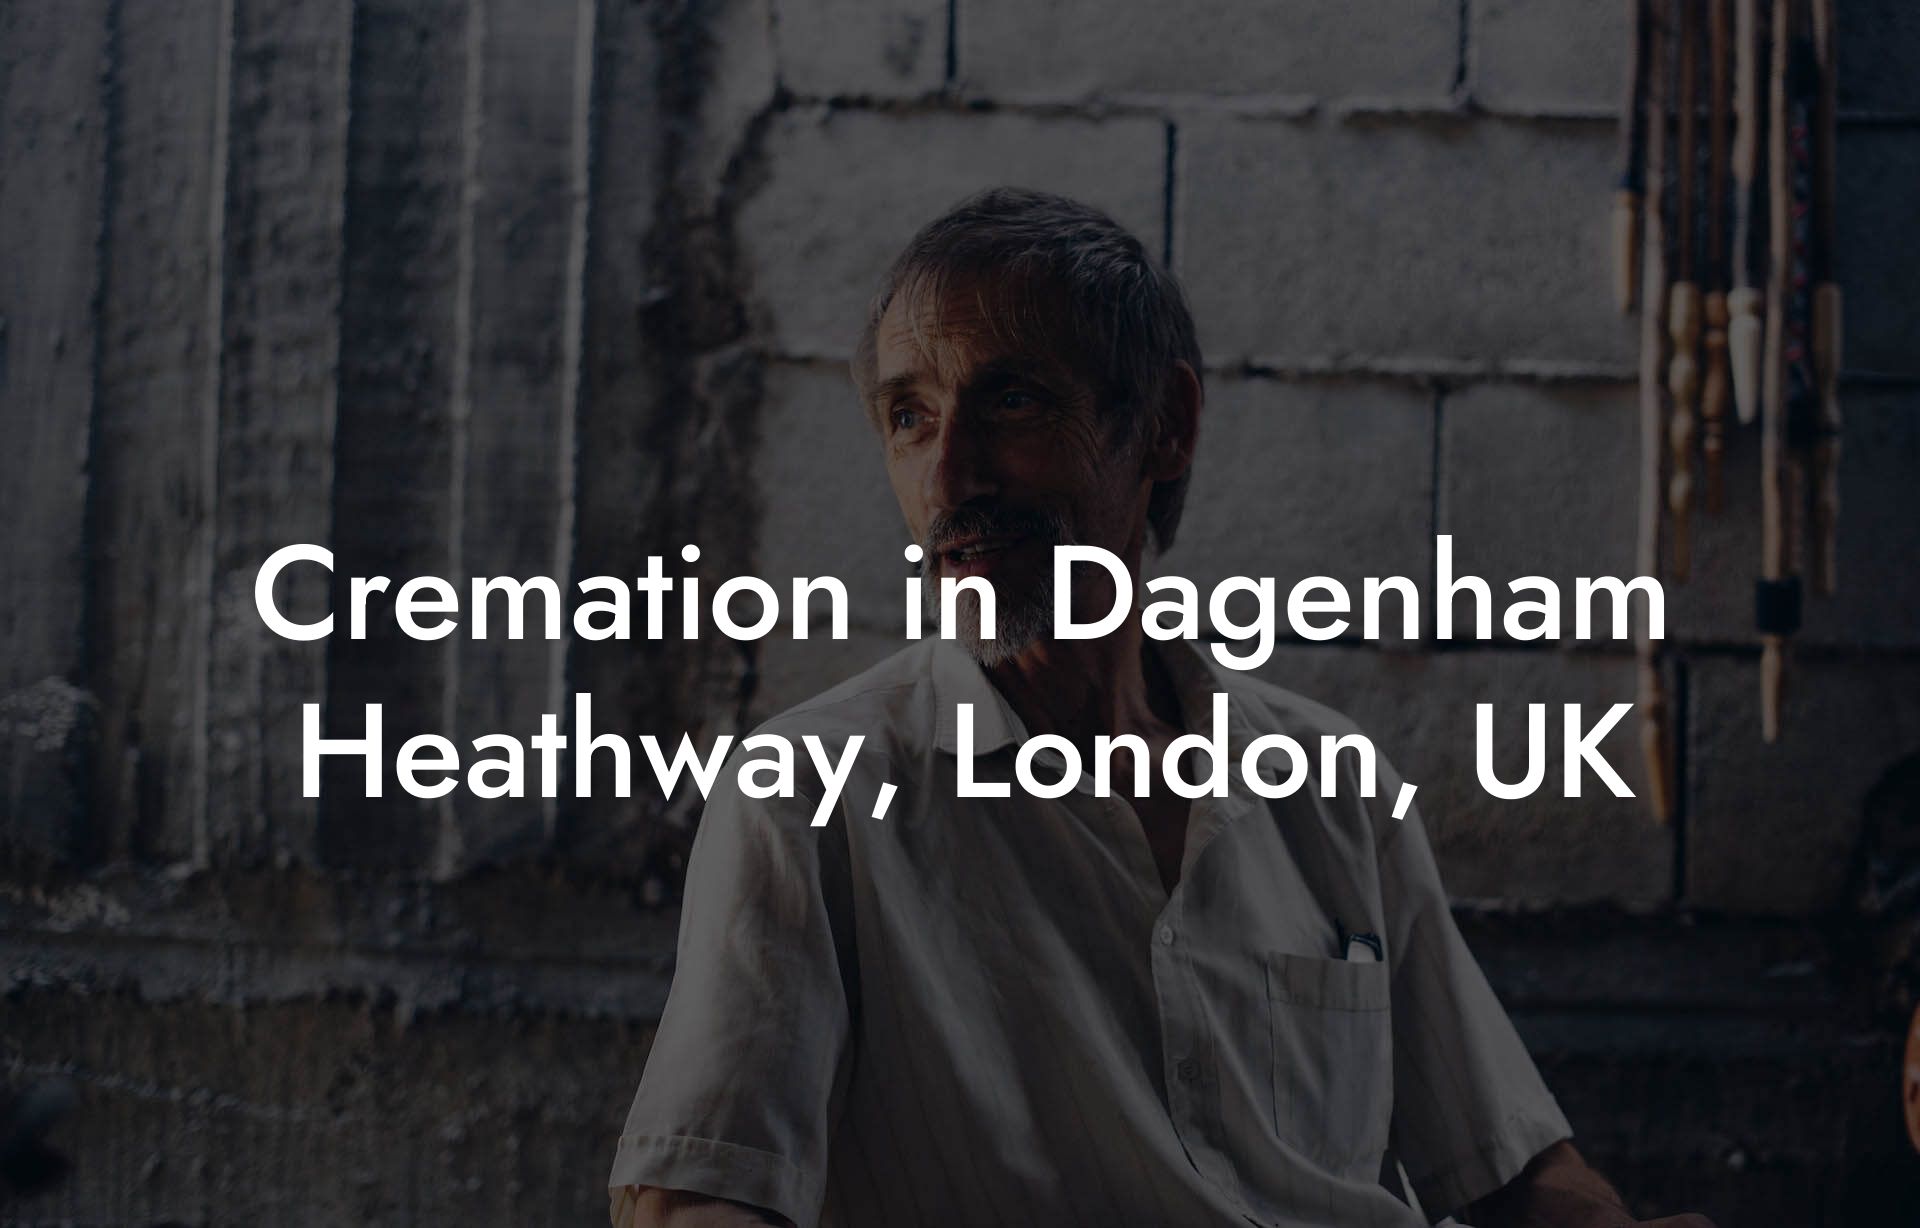 Cremation in Dagenham Heathway, London, UK